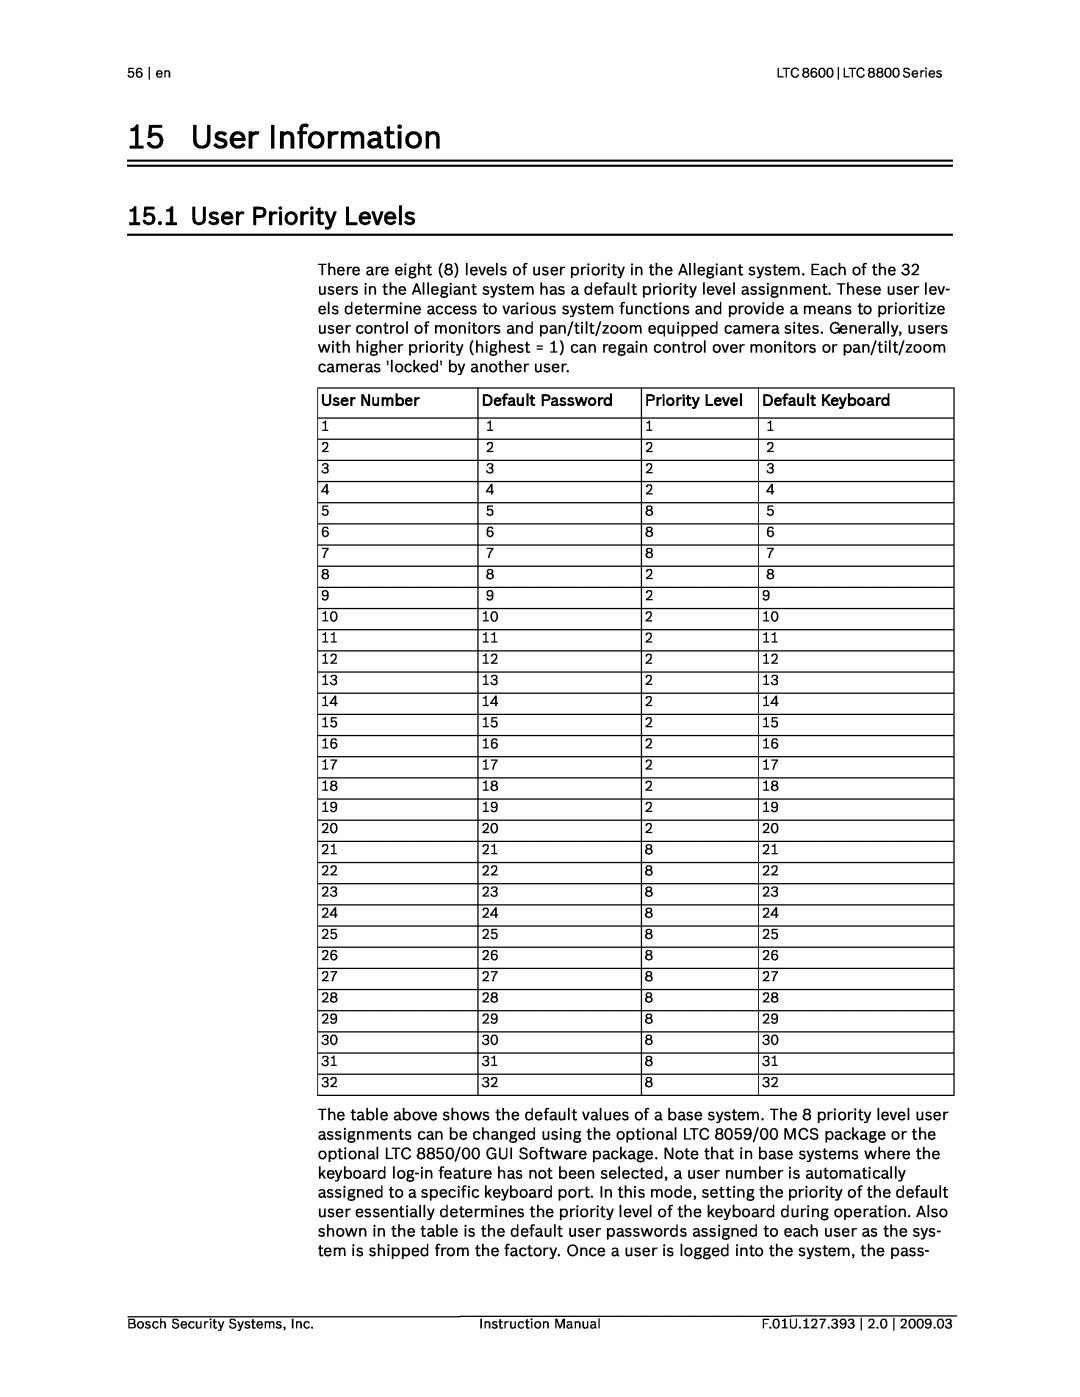 Bosch Appliances LTC 8600 User Information, User Priority Levels, User Number, Default Password, Default Keyboard 